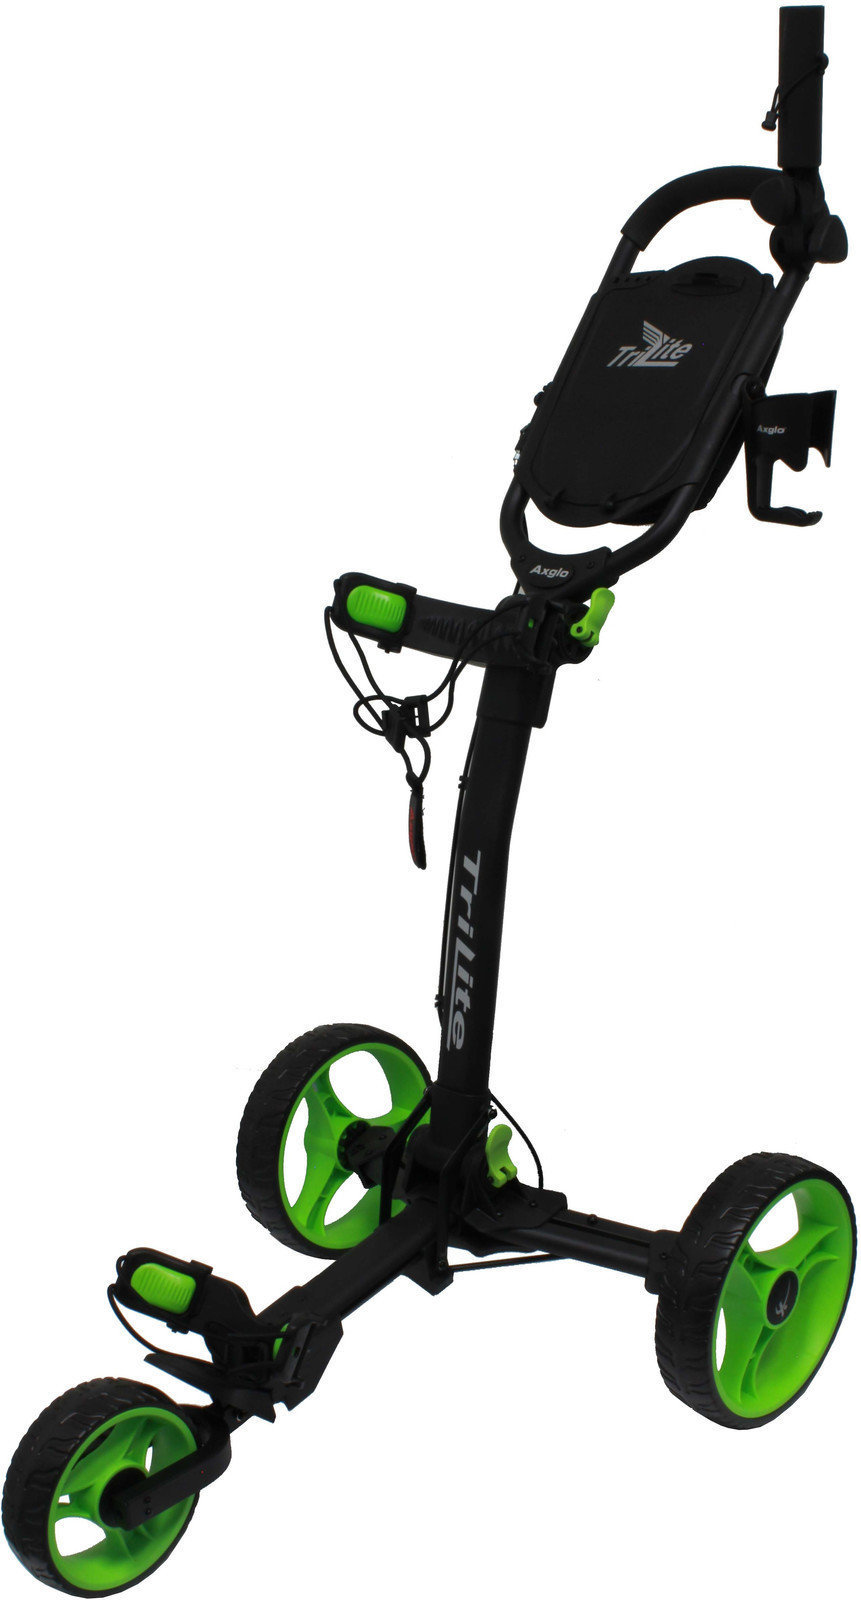 Axglo TriLite Black/Green Golf Trolley Axglo